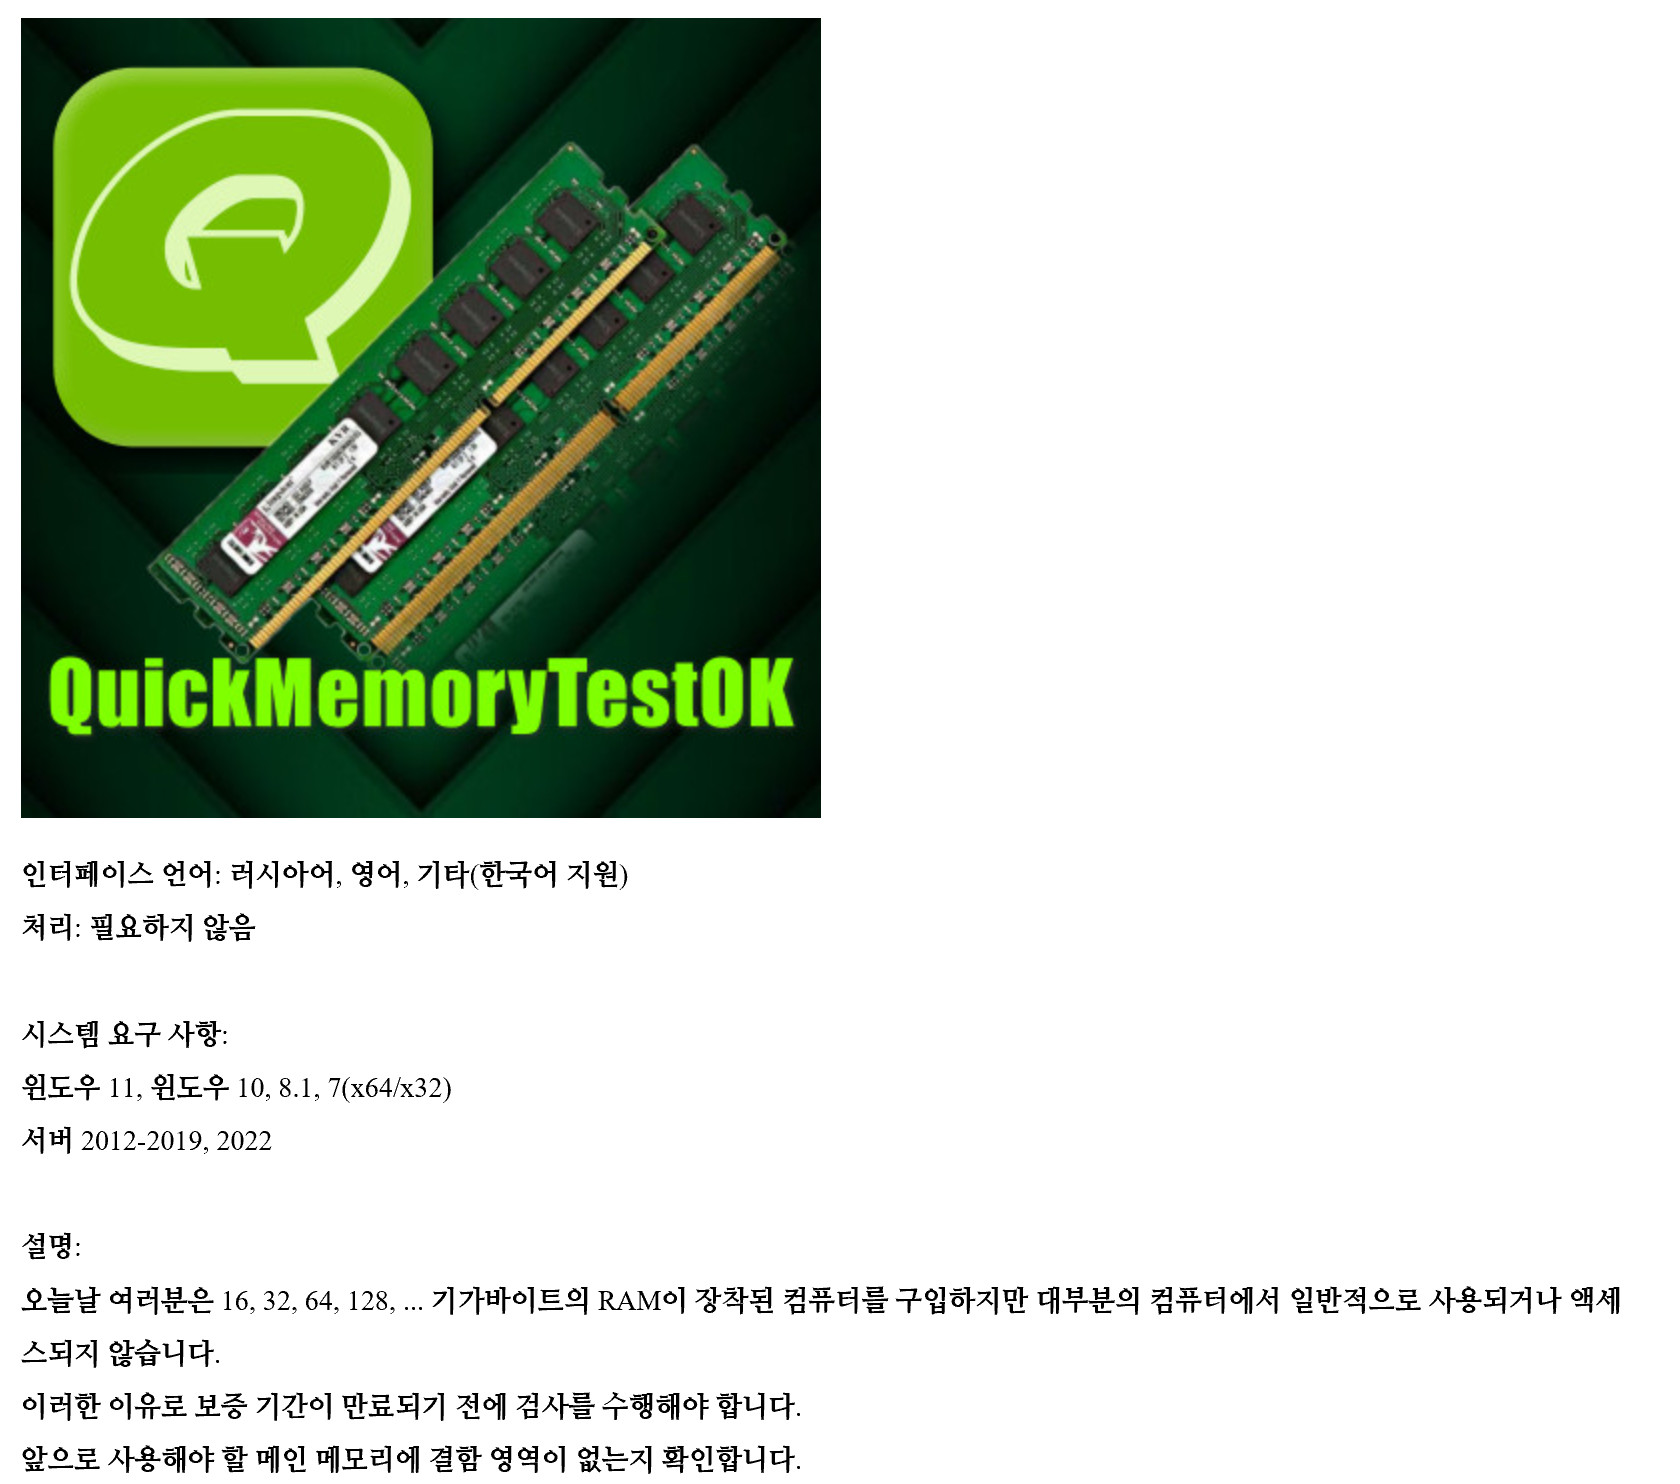 QuickMemoryTestOK 4.67 for apple download free